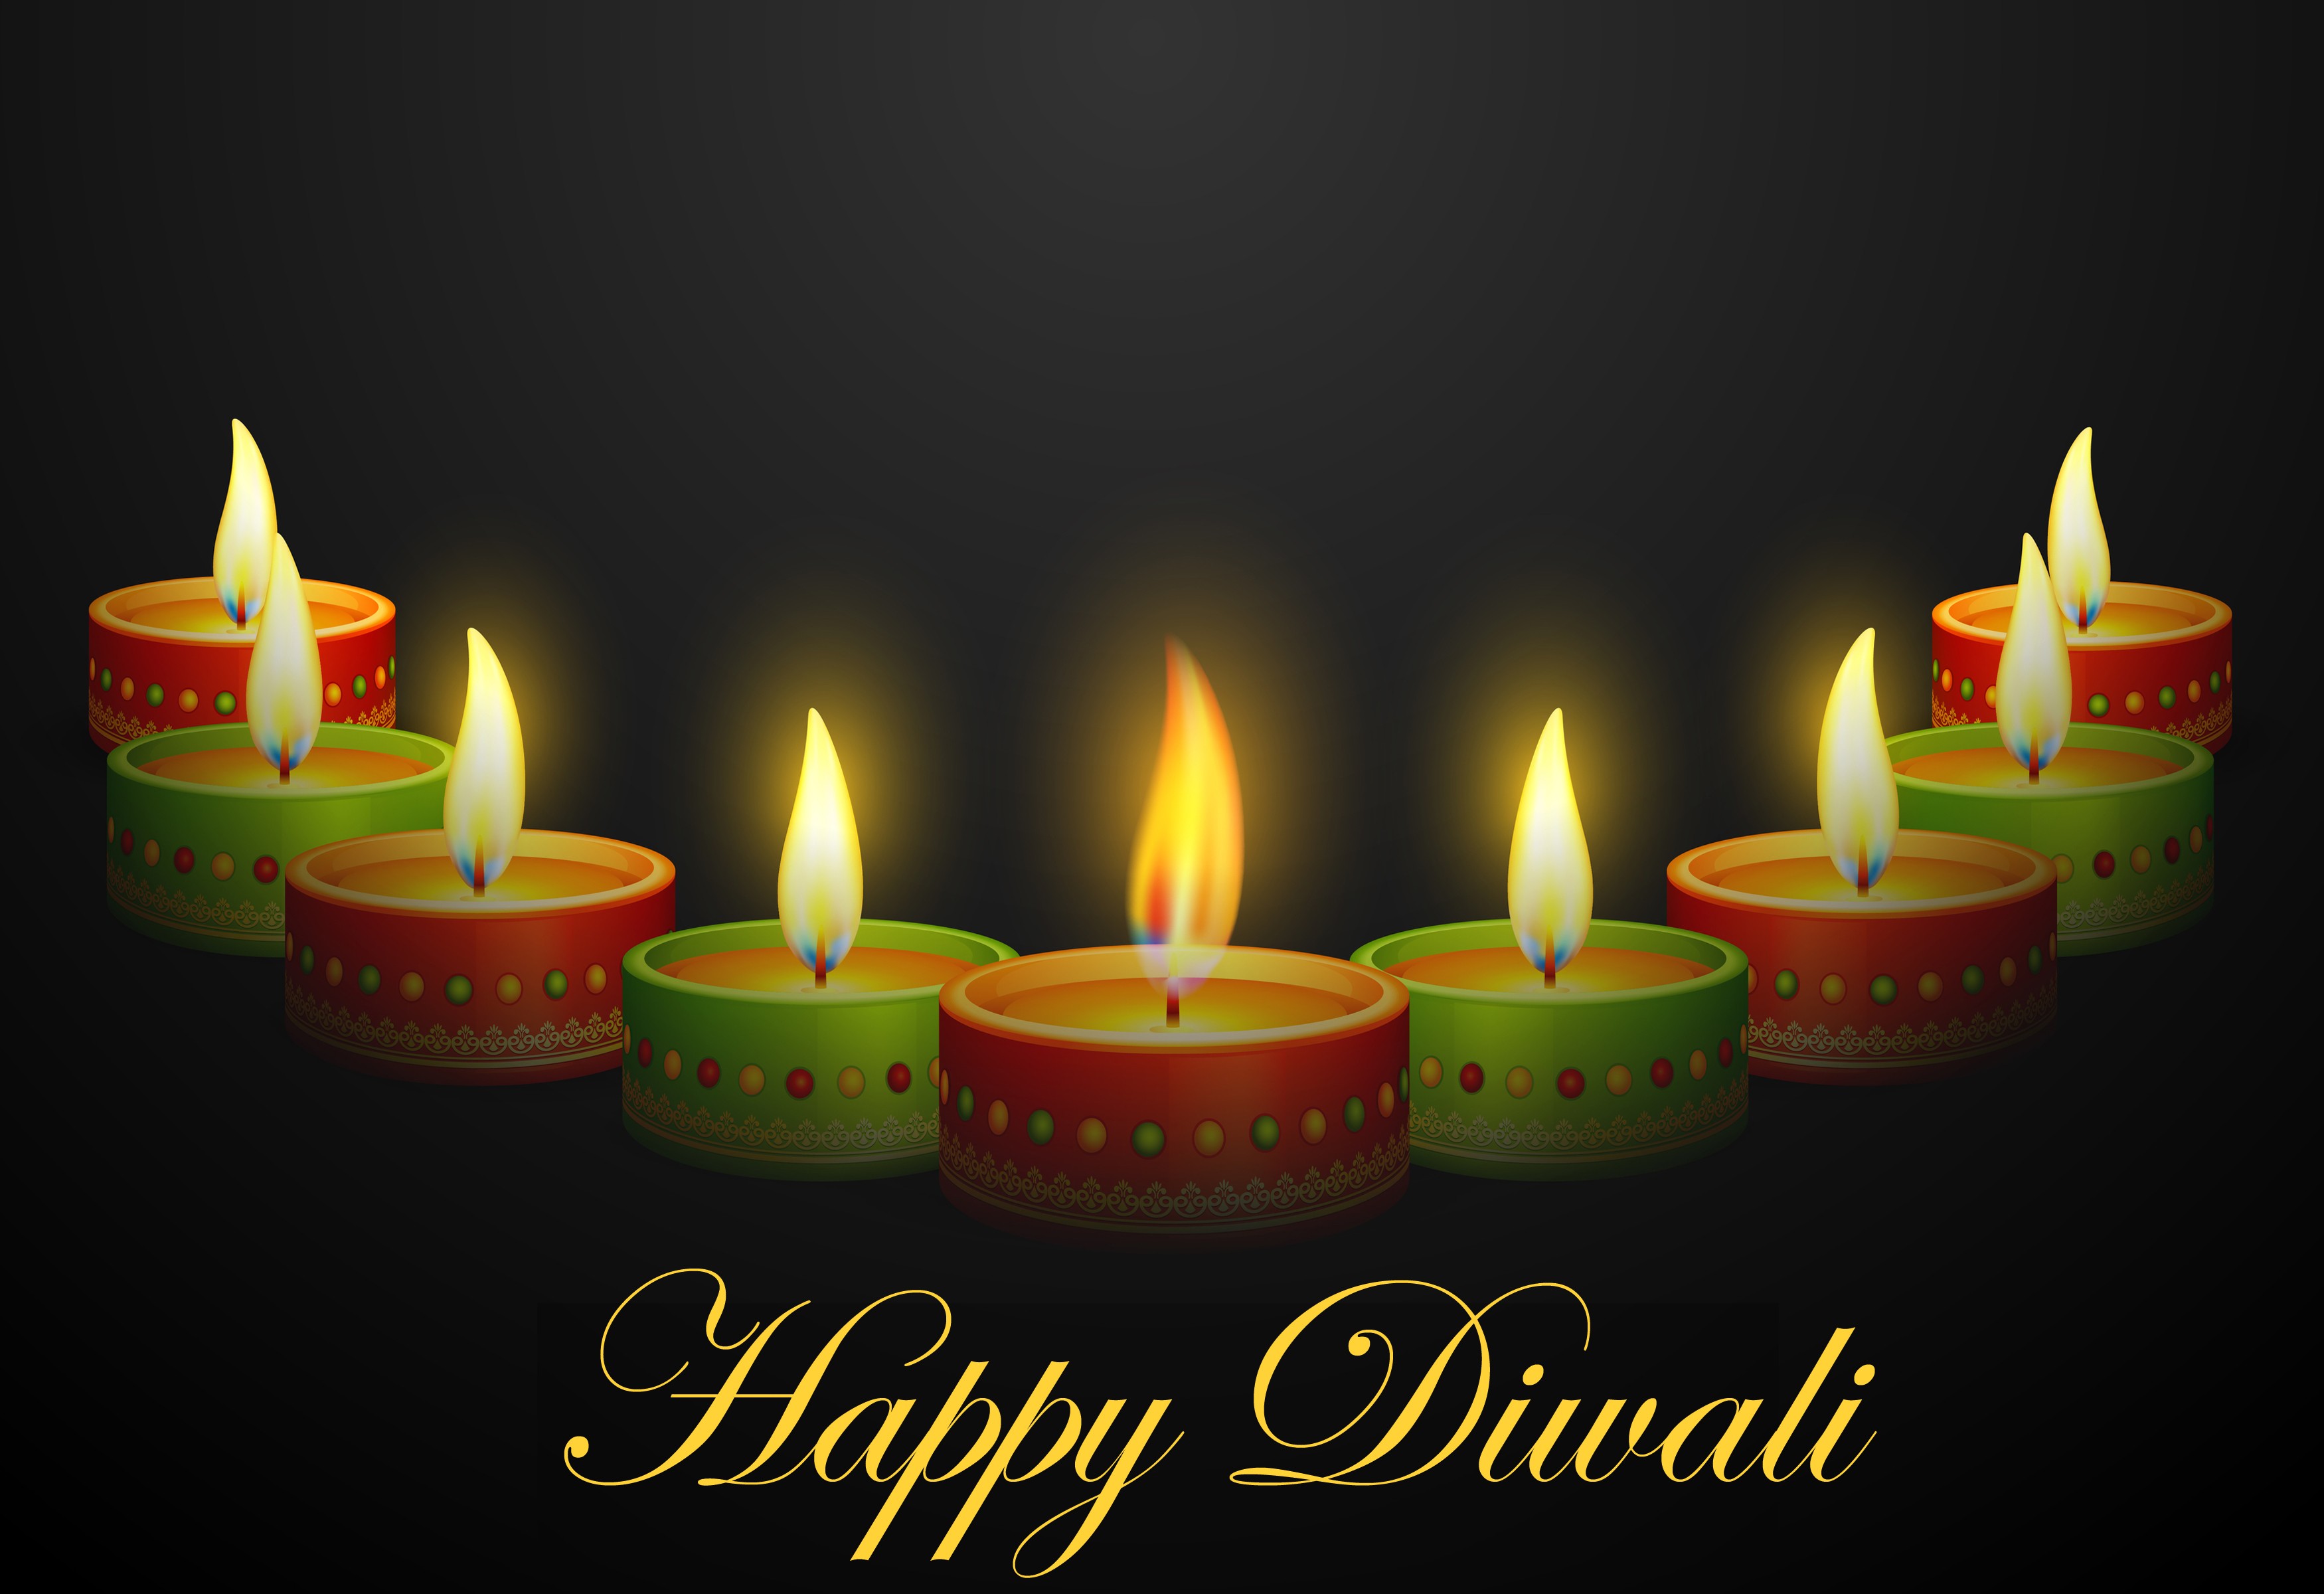 Download Free HD Wallpapers of Diwali 2020 Diwali 2020